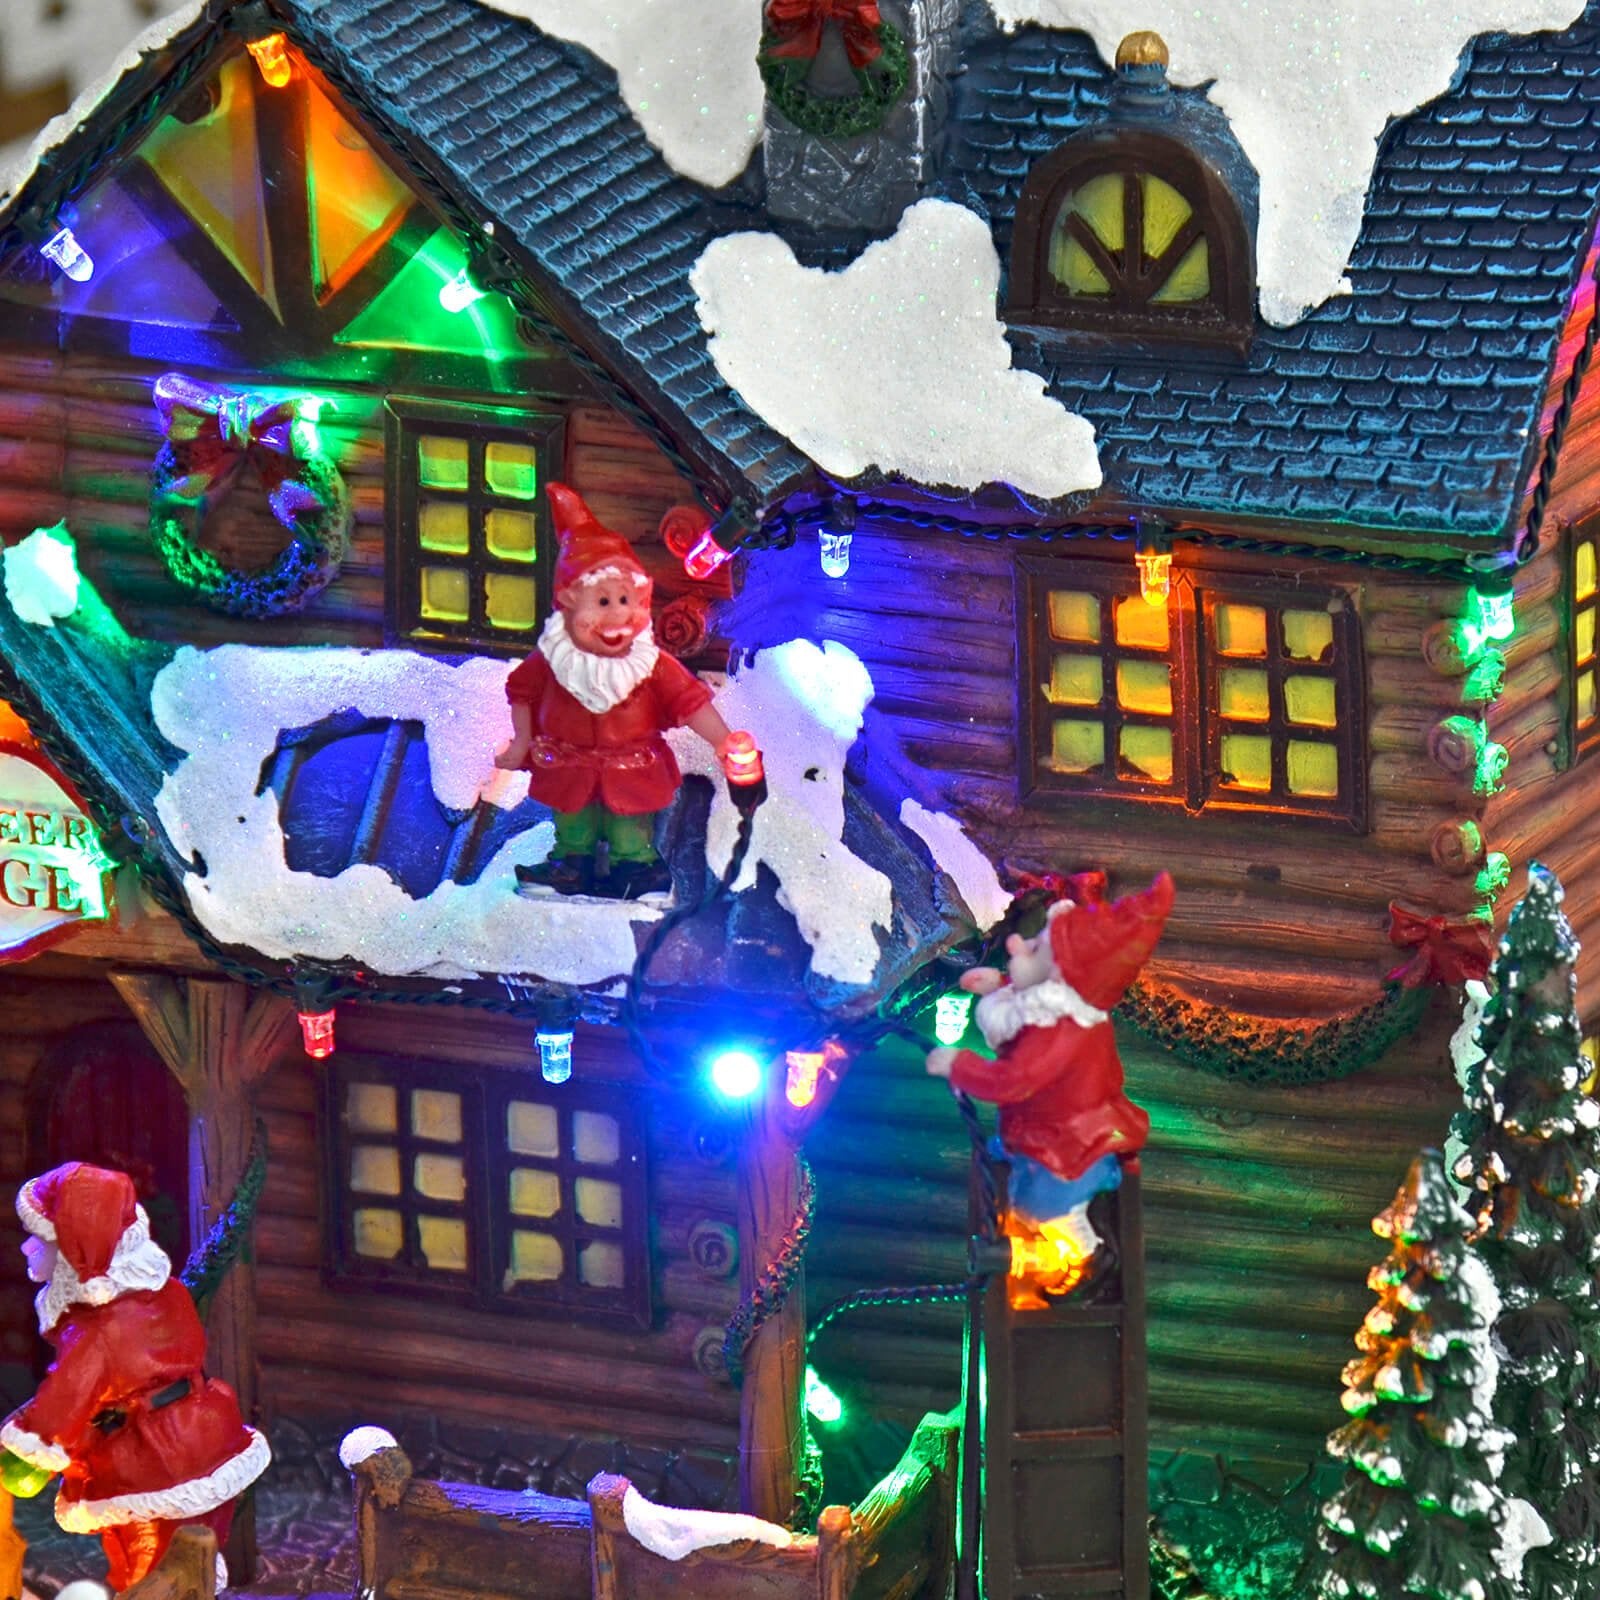 Mr Crimbo Christmas Reindeer Lodge Ornament LED Music Moving 24cm - MrCrimbo.co.uk -XS7223 - -led reindeer ornament